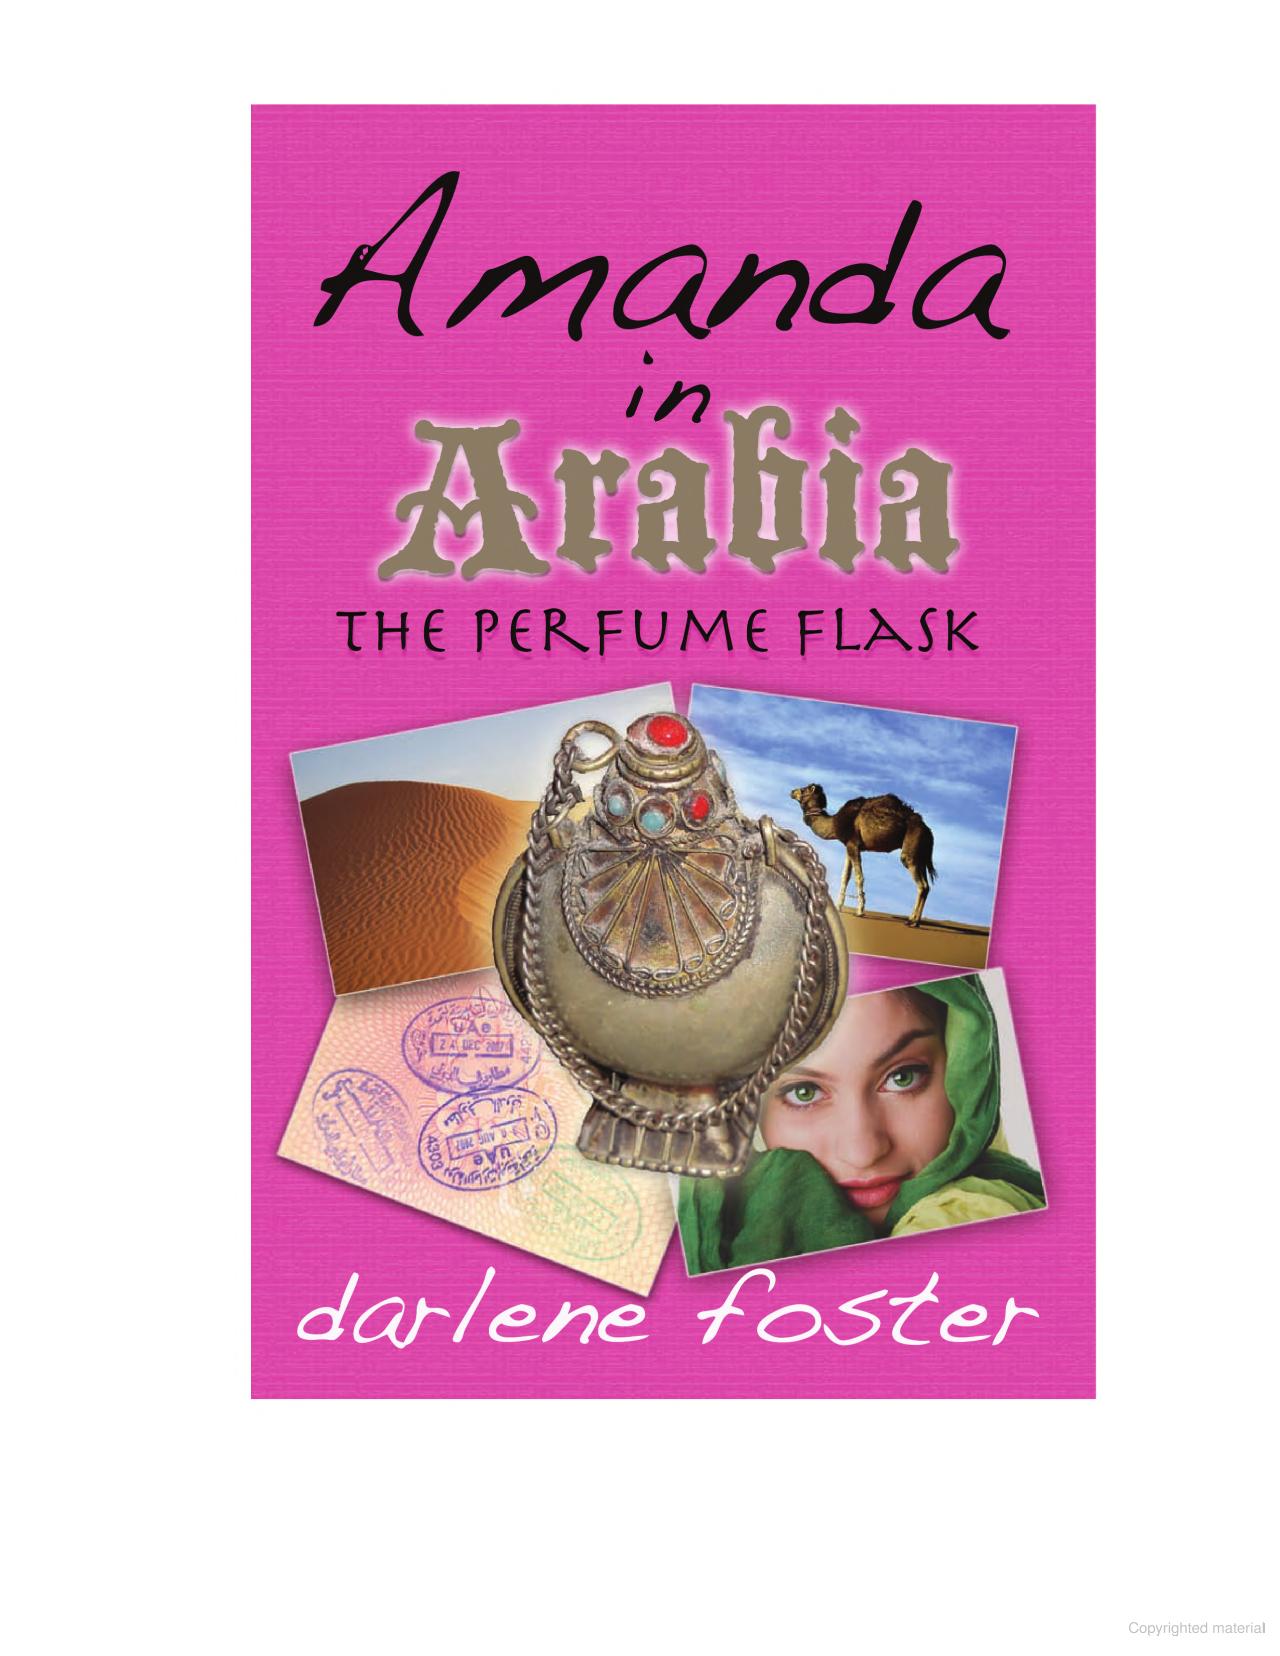 Book Review: Amanda in Arabia by Darlene Foster